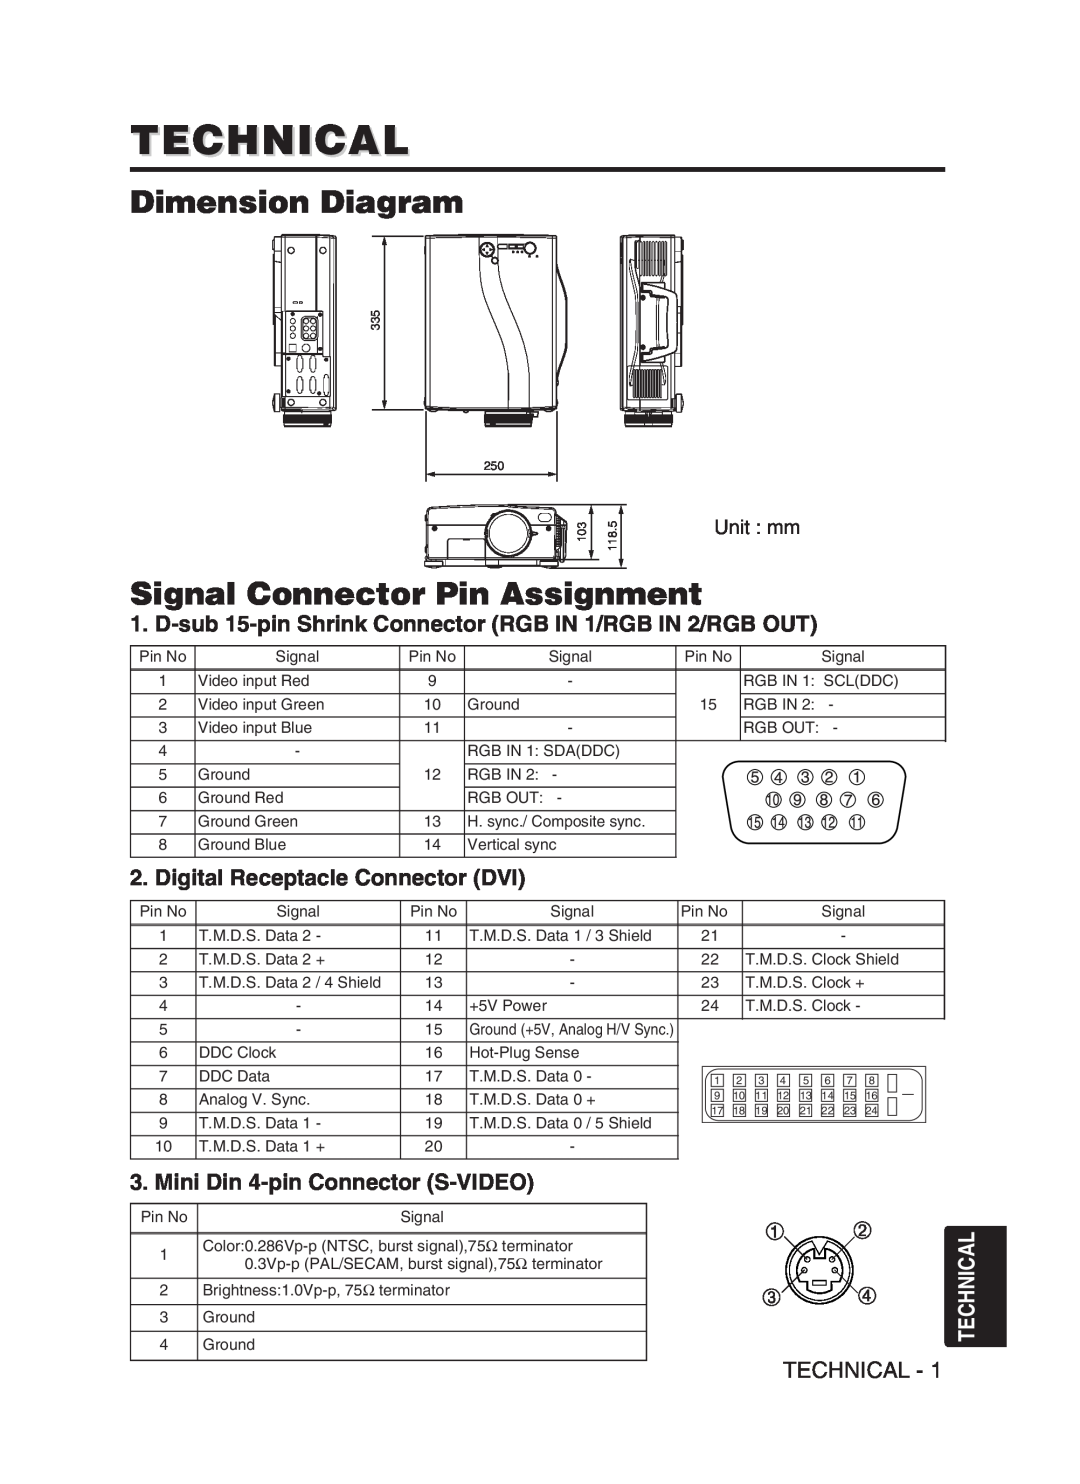 Hitachi CP-SX5600W Technical, Dimension Diagram, Signal Connector Pin Assignment, Digital Receptacle Connector DVI 